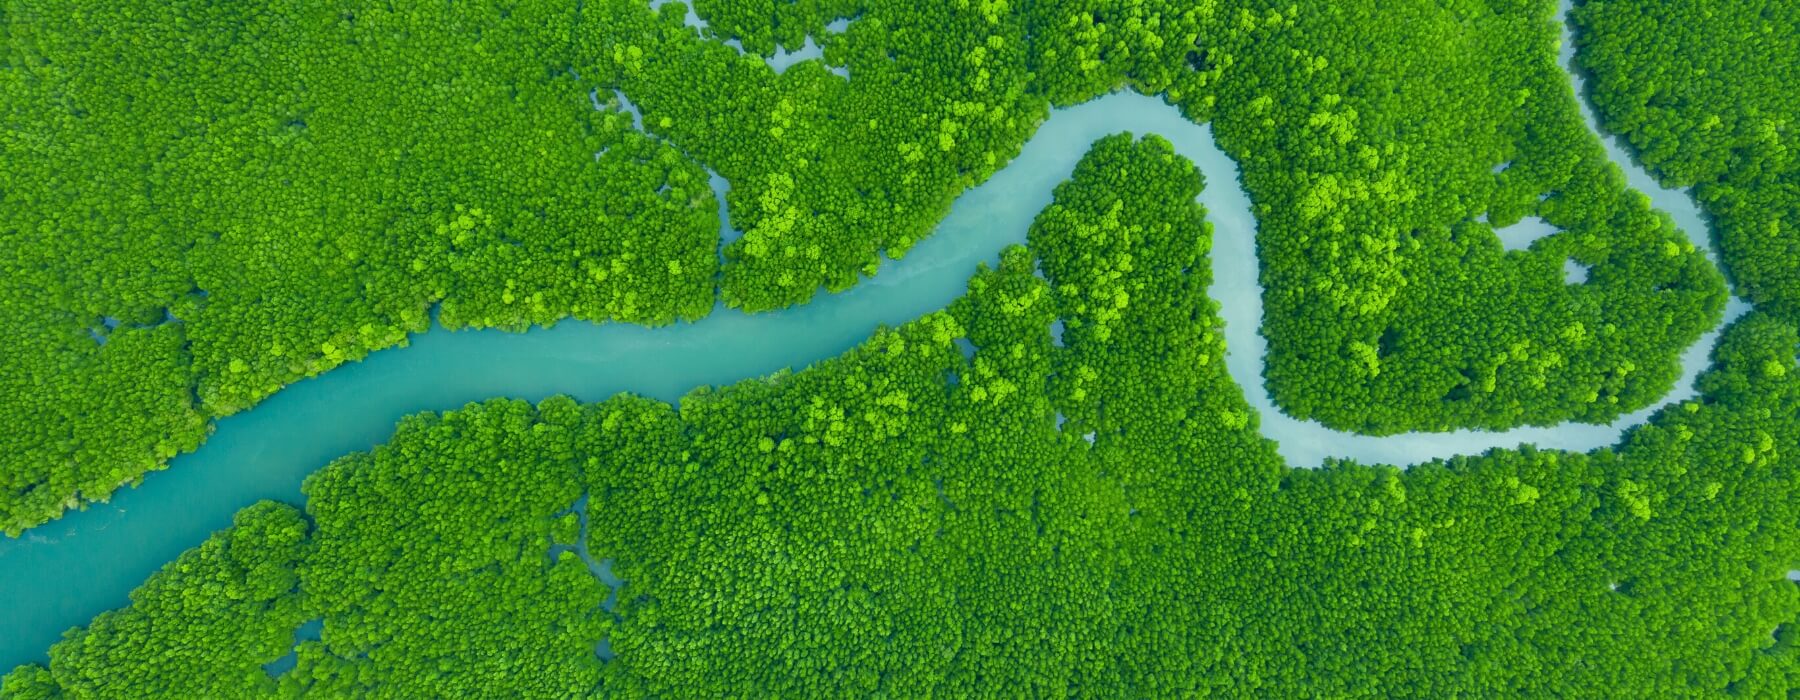 12 GREAT REASONS TO VISIT THE PERUVIAN AMAZON RAINFOREST